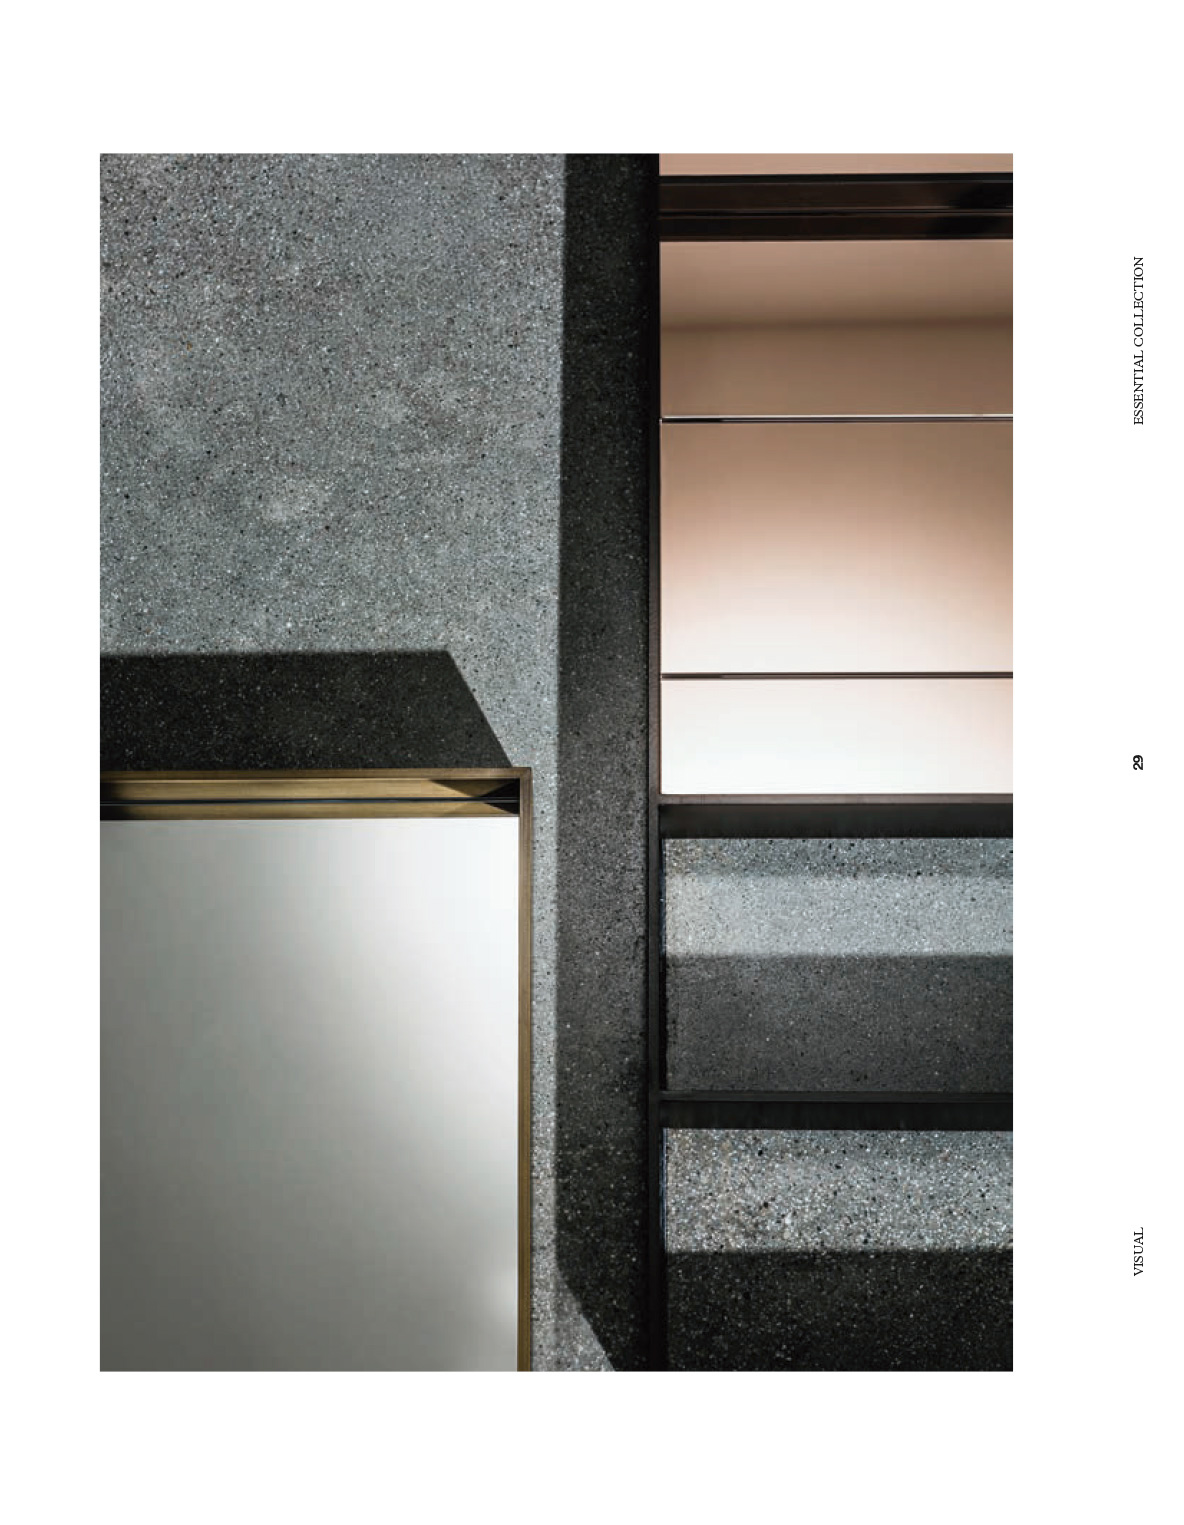 Adobe Portfolio Pennati design Lux landoni sovet glass black table Interior molina Lievore product light